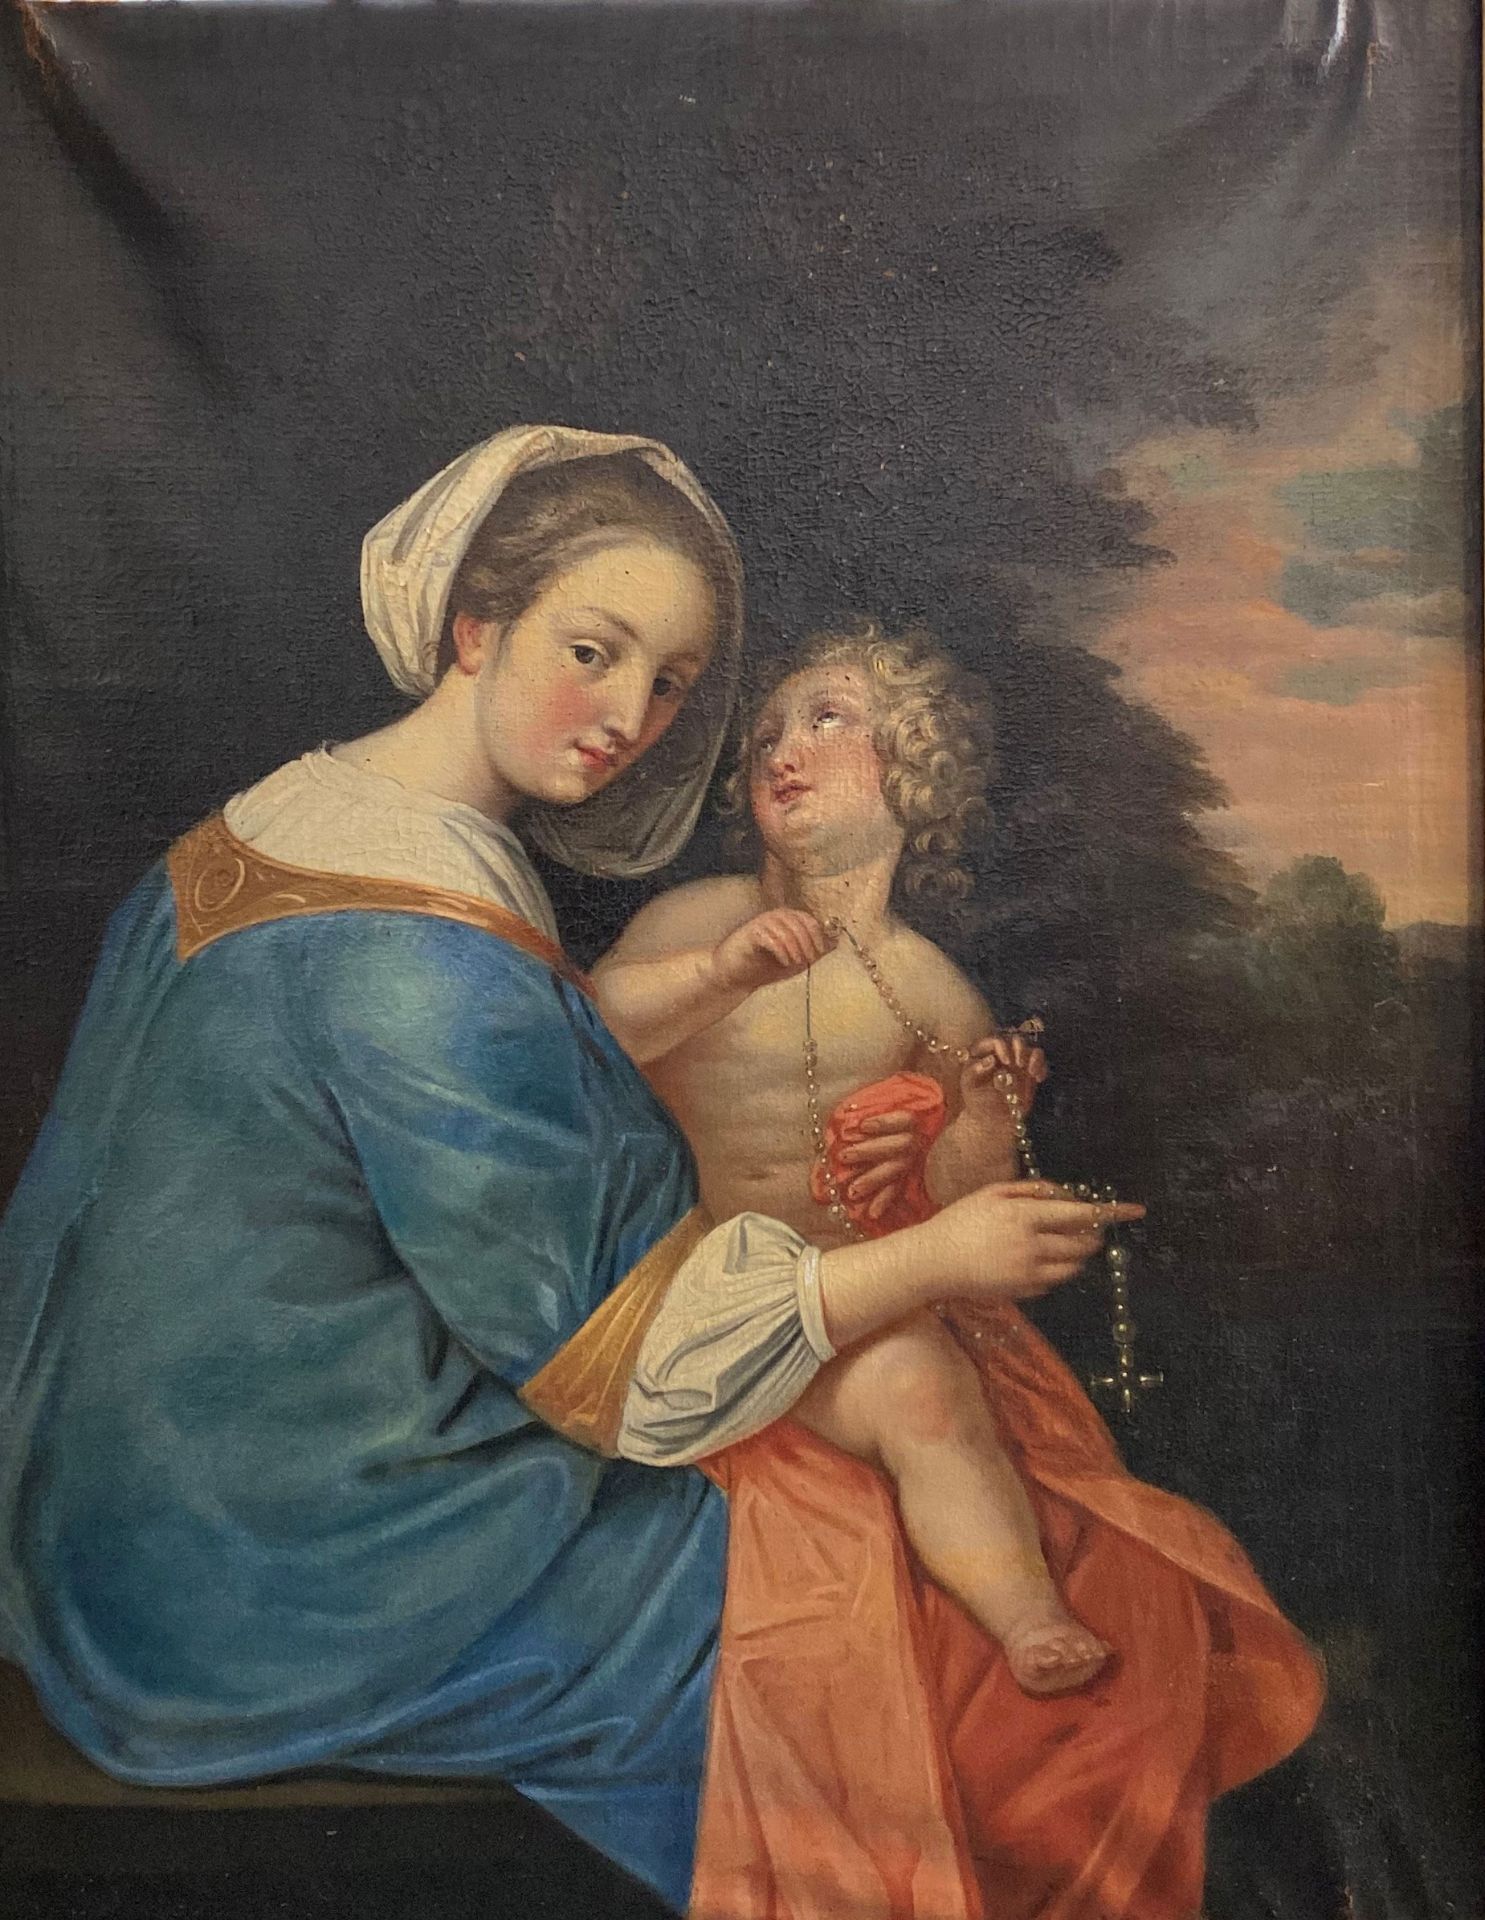 Large oil on canvas 17th century religious scene